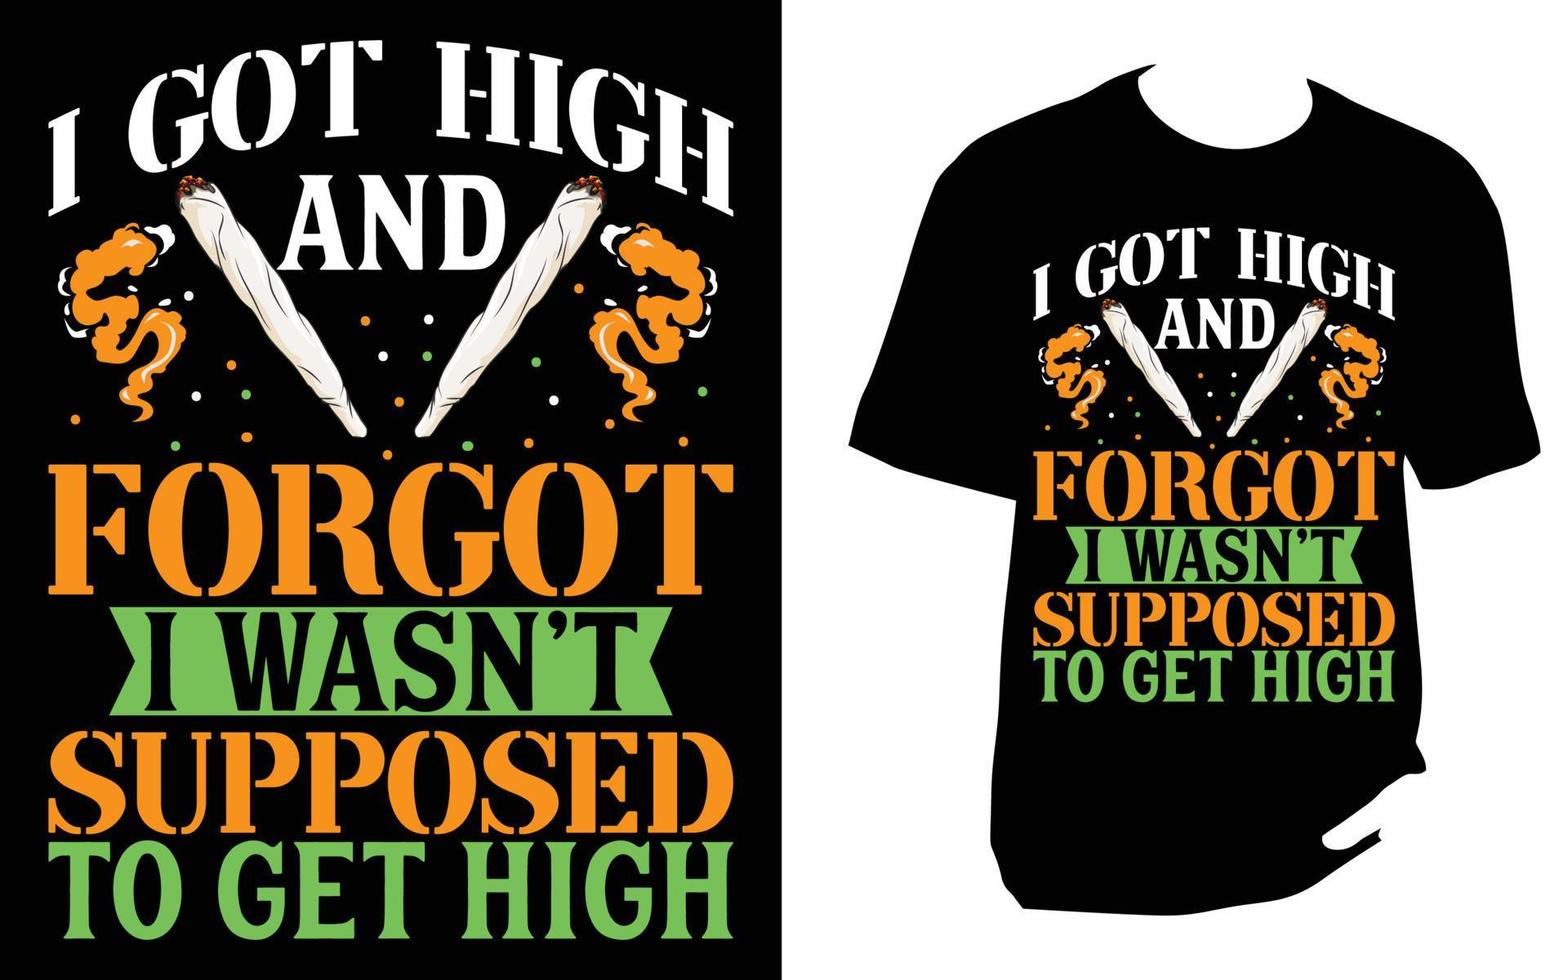 Cannabis, Unkraut-T-Shirt, Marihuana-T-Shirt vektor